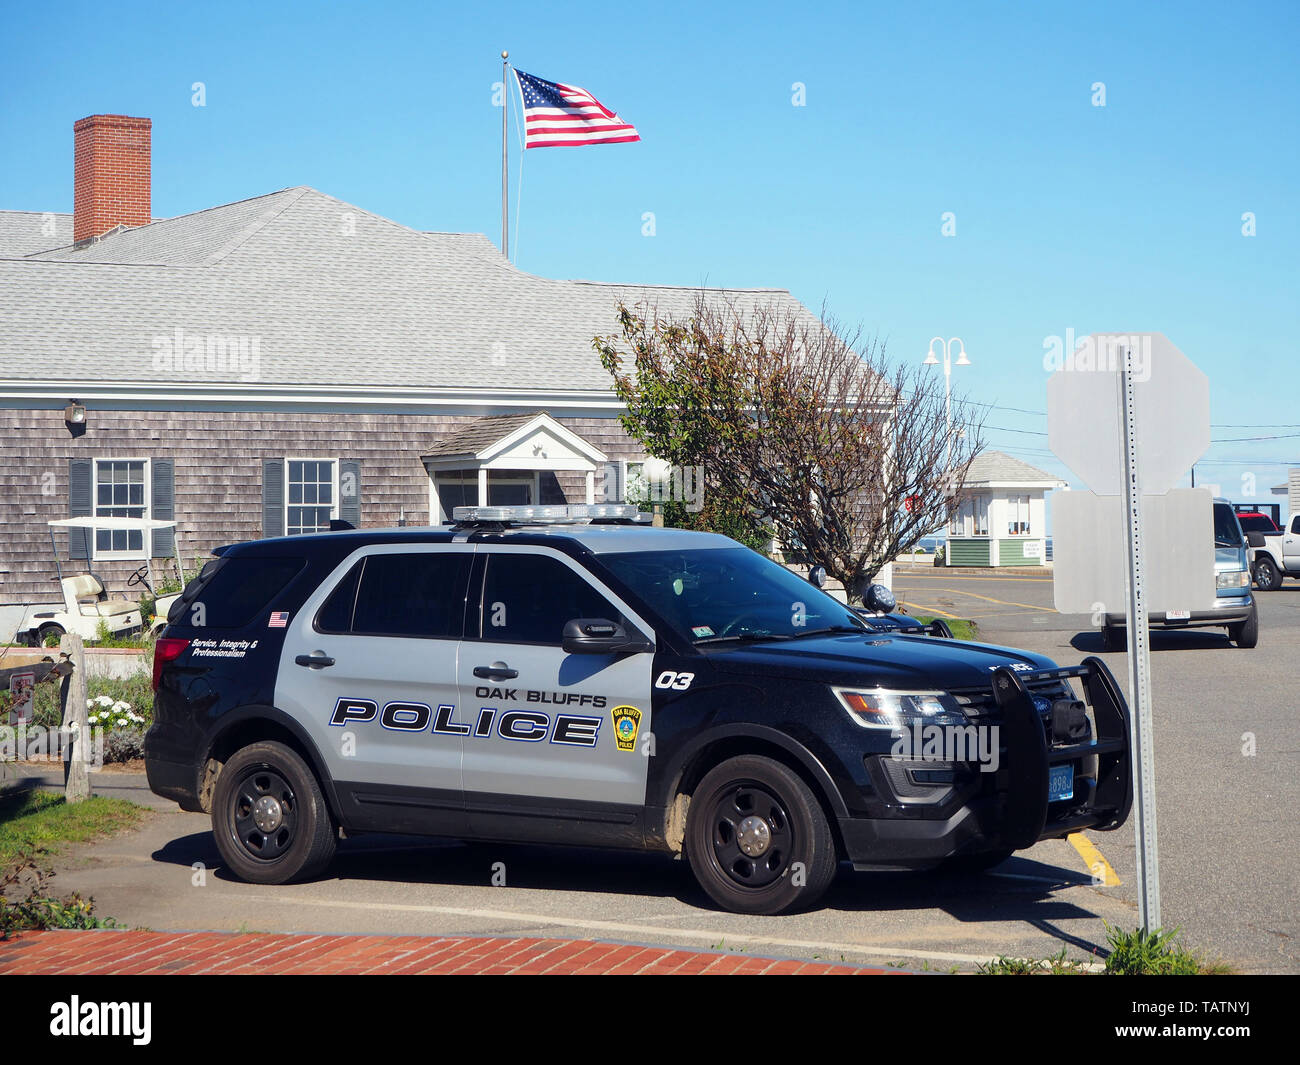 Oak Bluffs Police Department vehicle, Oak Bluffs, Marthas Vineyard, Massachusetts, USA Stock Photo